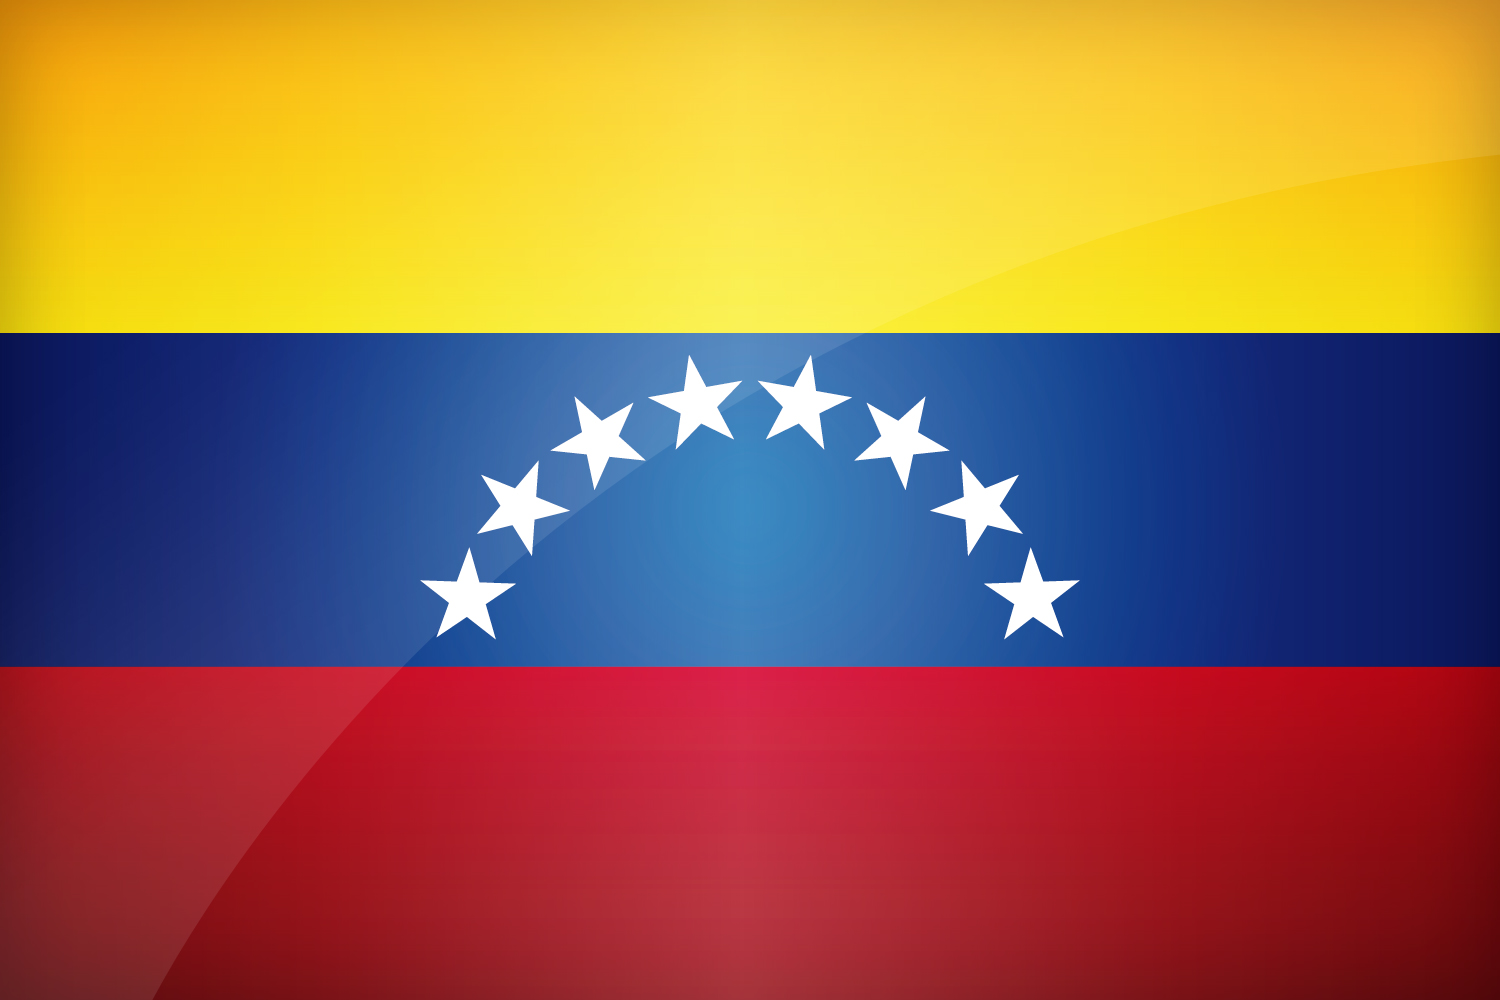 High Resolution Wallpaper | Flag Of Venezuela 1500x1000 px